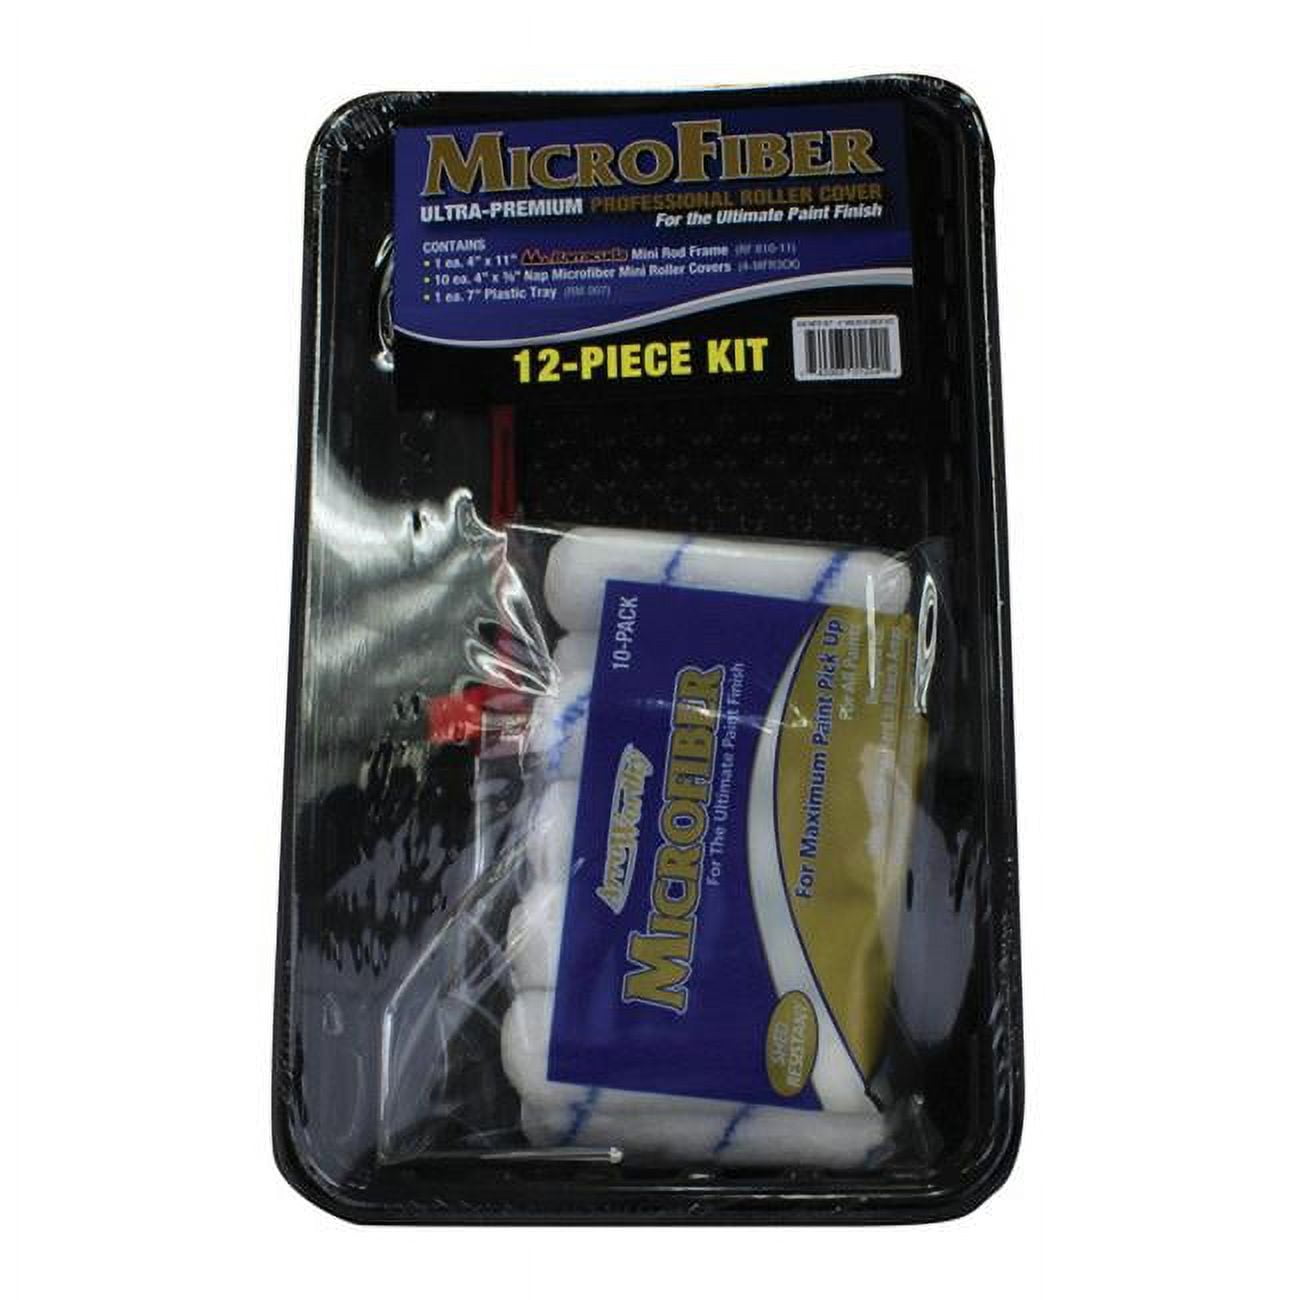 1808021 Microfiber Paint Brush & Roller Cover Kit - 12 Piece